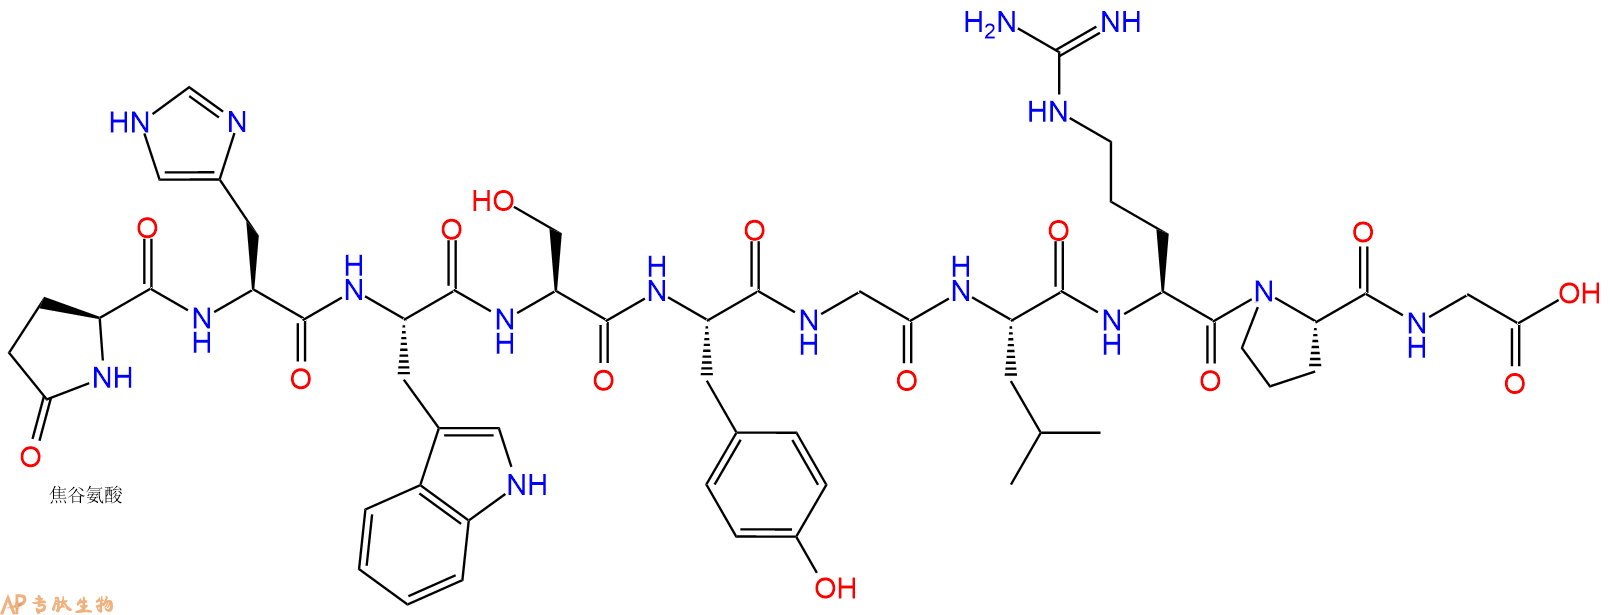 专肽生物产品Luteinizing Hormone - Releasing Hormone (LH - RH) free acid human35263-73-1